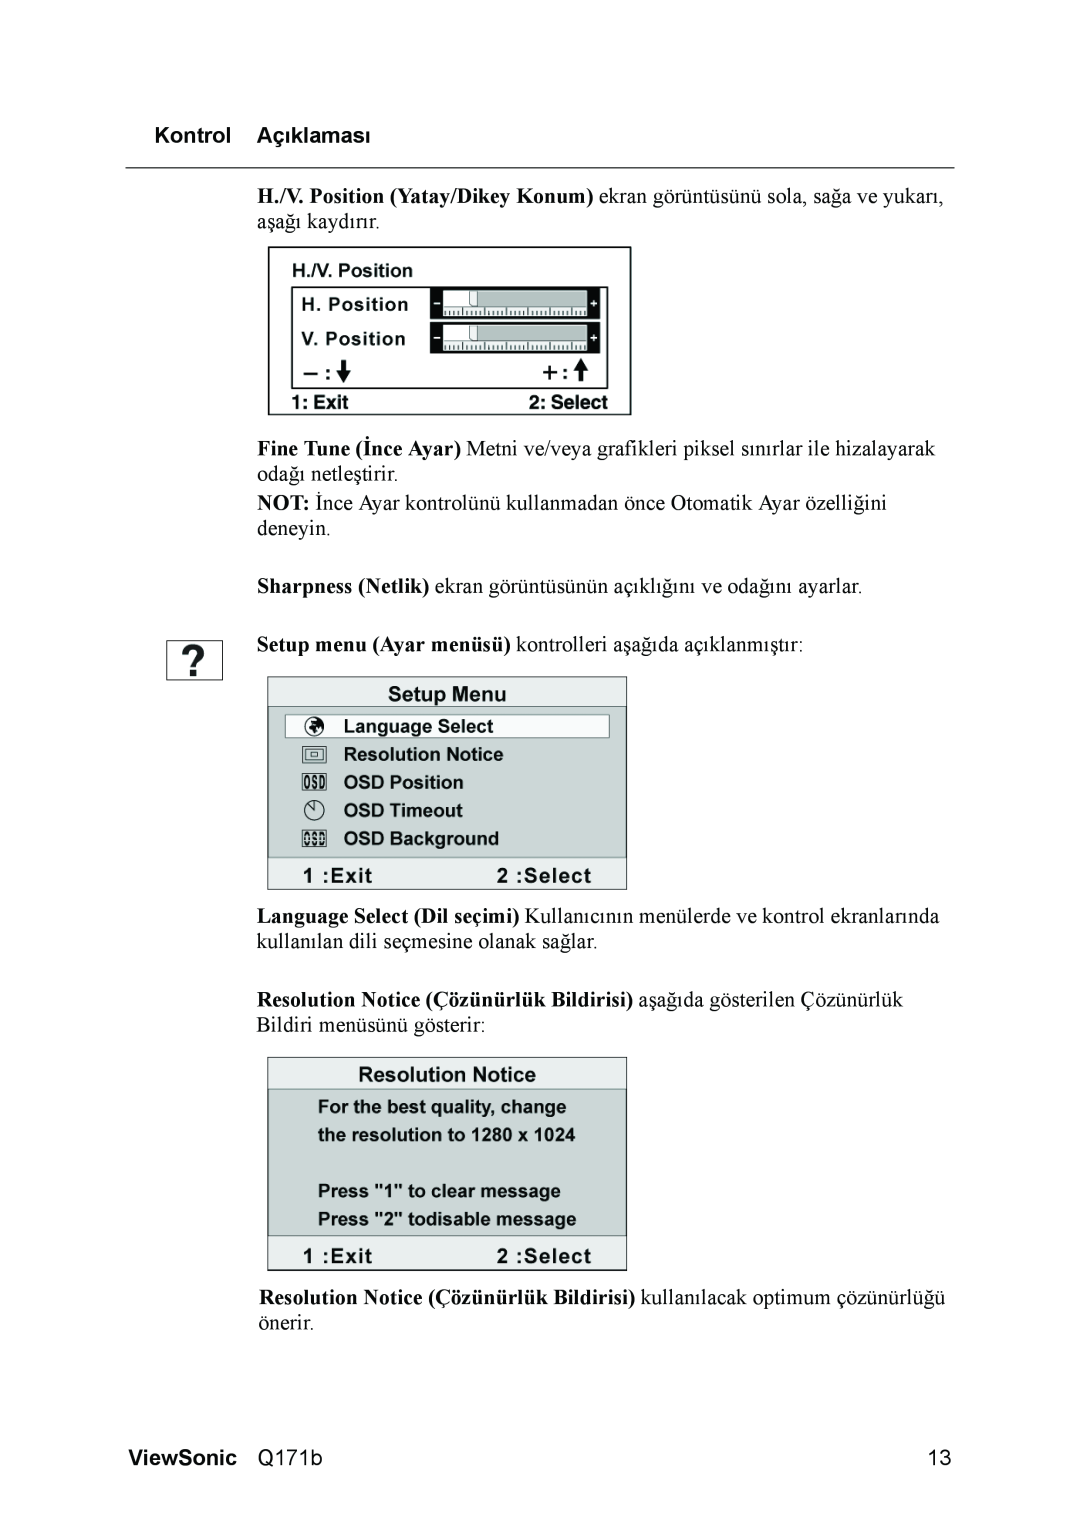 ViewSonic Q171B manual Kontrol Açıklaması, ViewSonic Q171b 